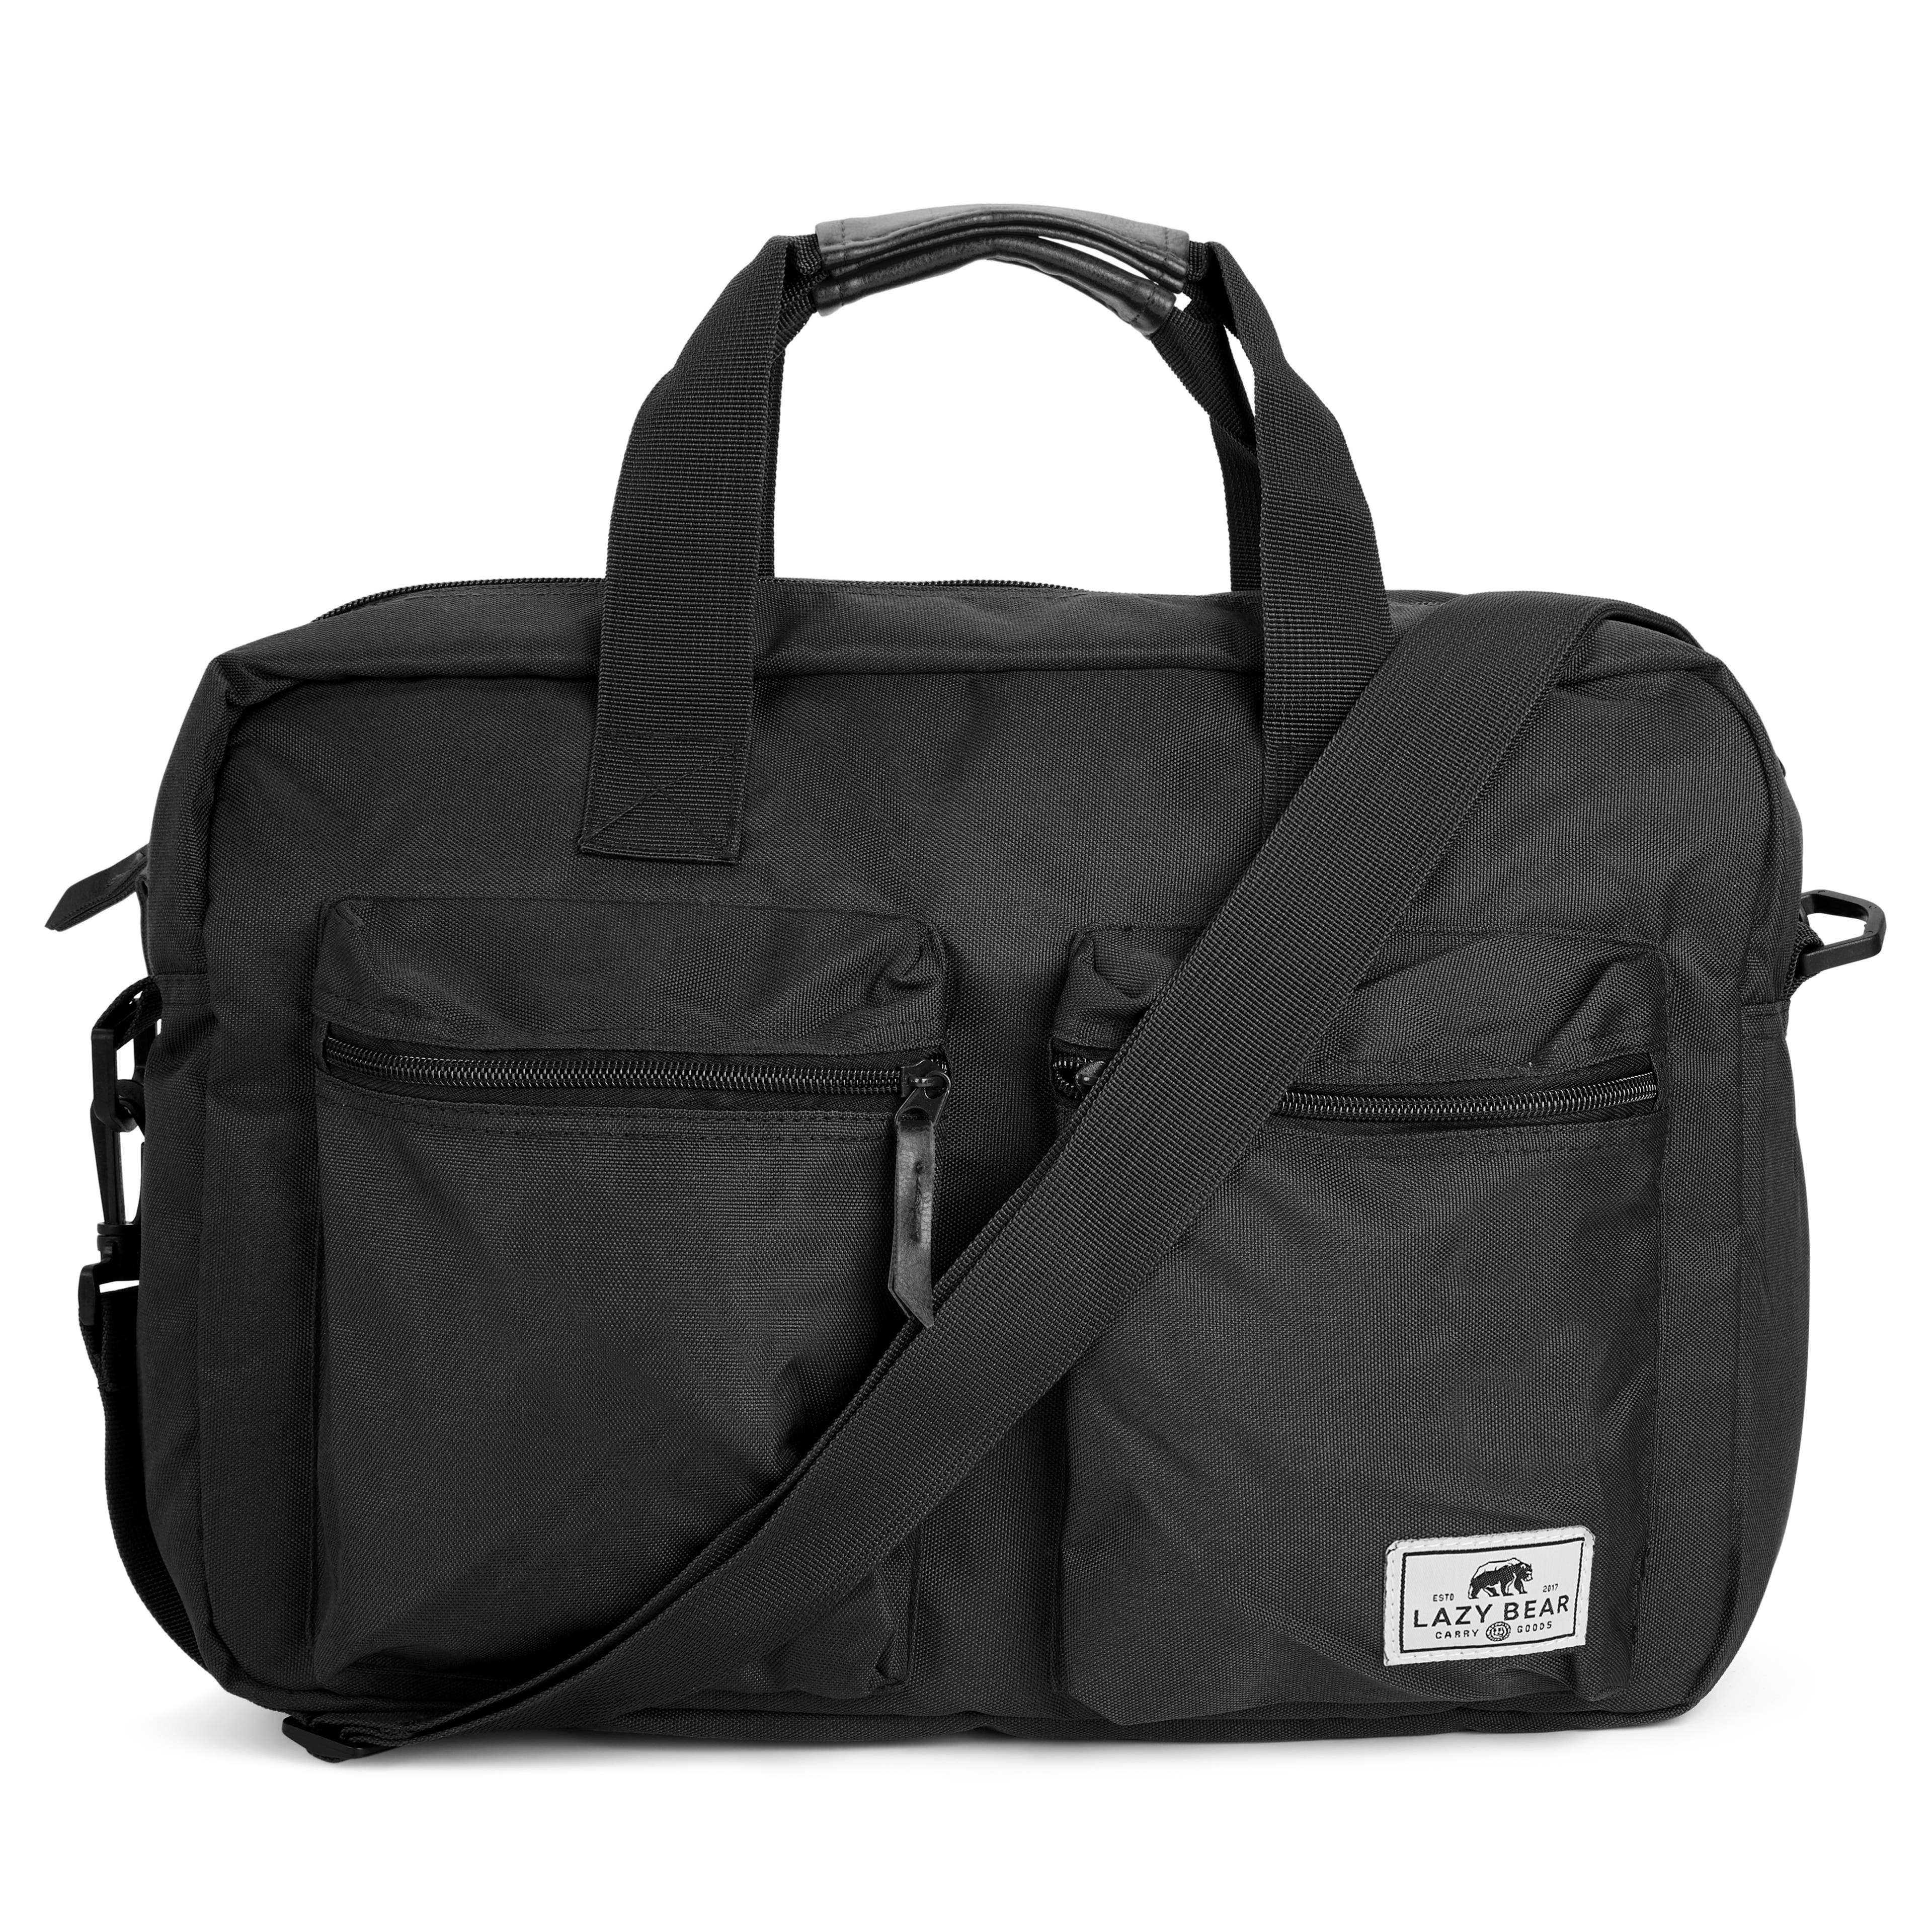 Lewis | Black Polyester & Faux Leather Laptop Bag